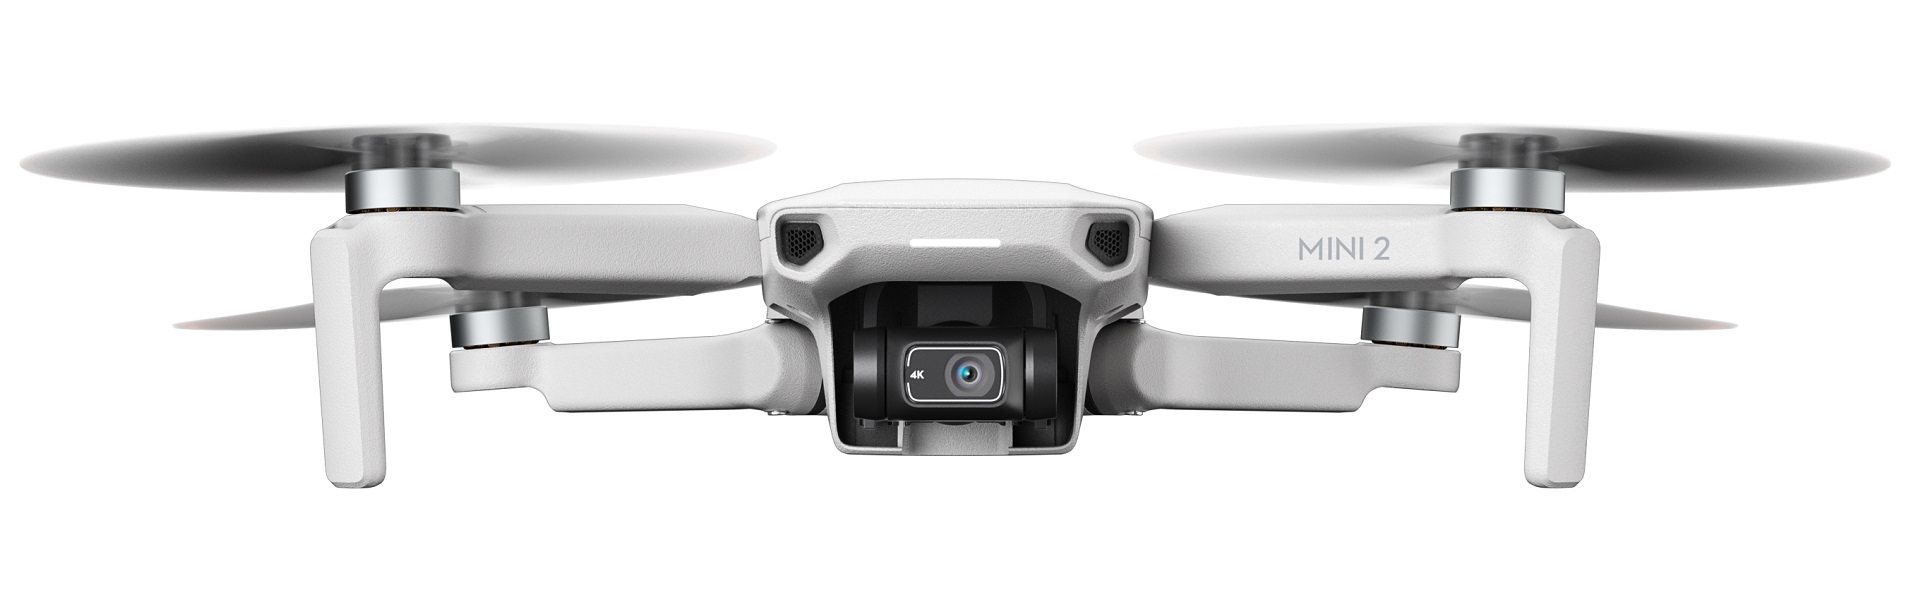 DJI Mini 2 Drone First Look Review - 4K Video, OcuSync 2.0, Same 